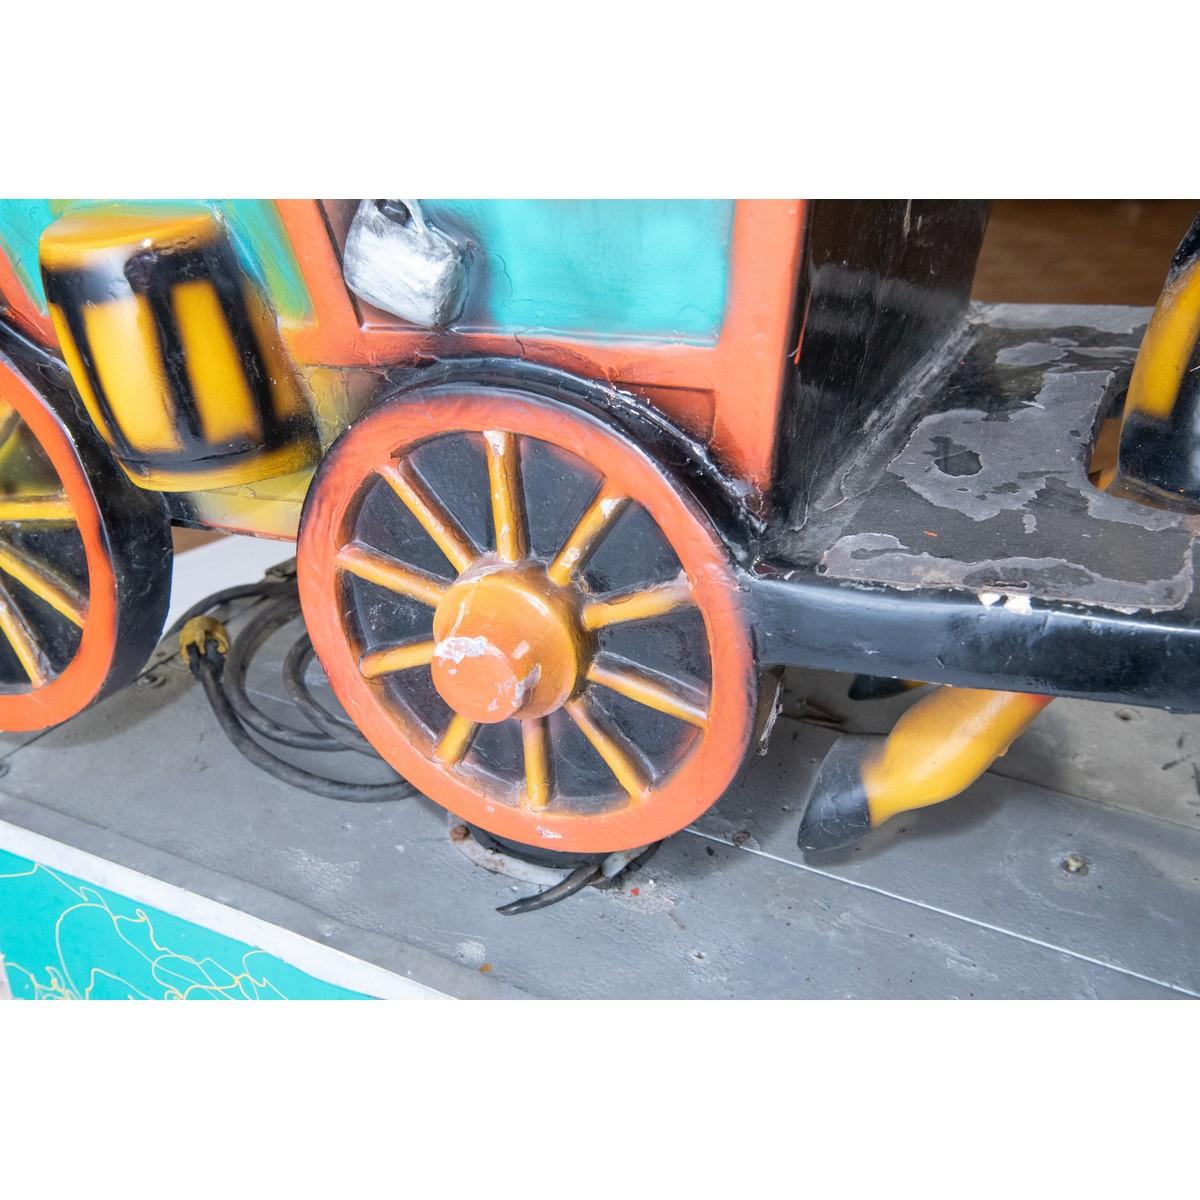 Vintage Coin-Op Covered Wagon Kiddie Ride